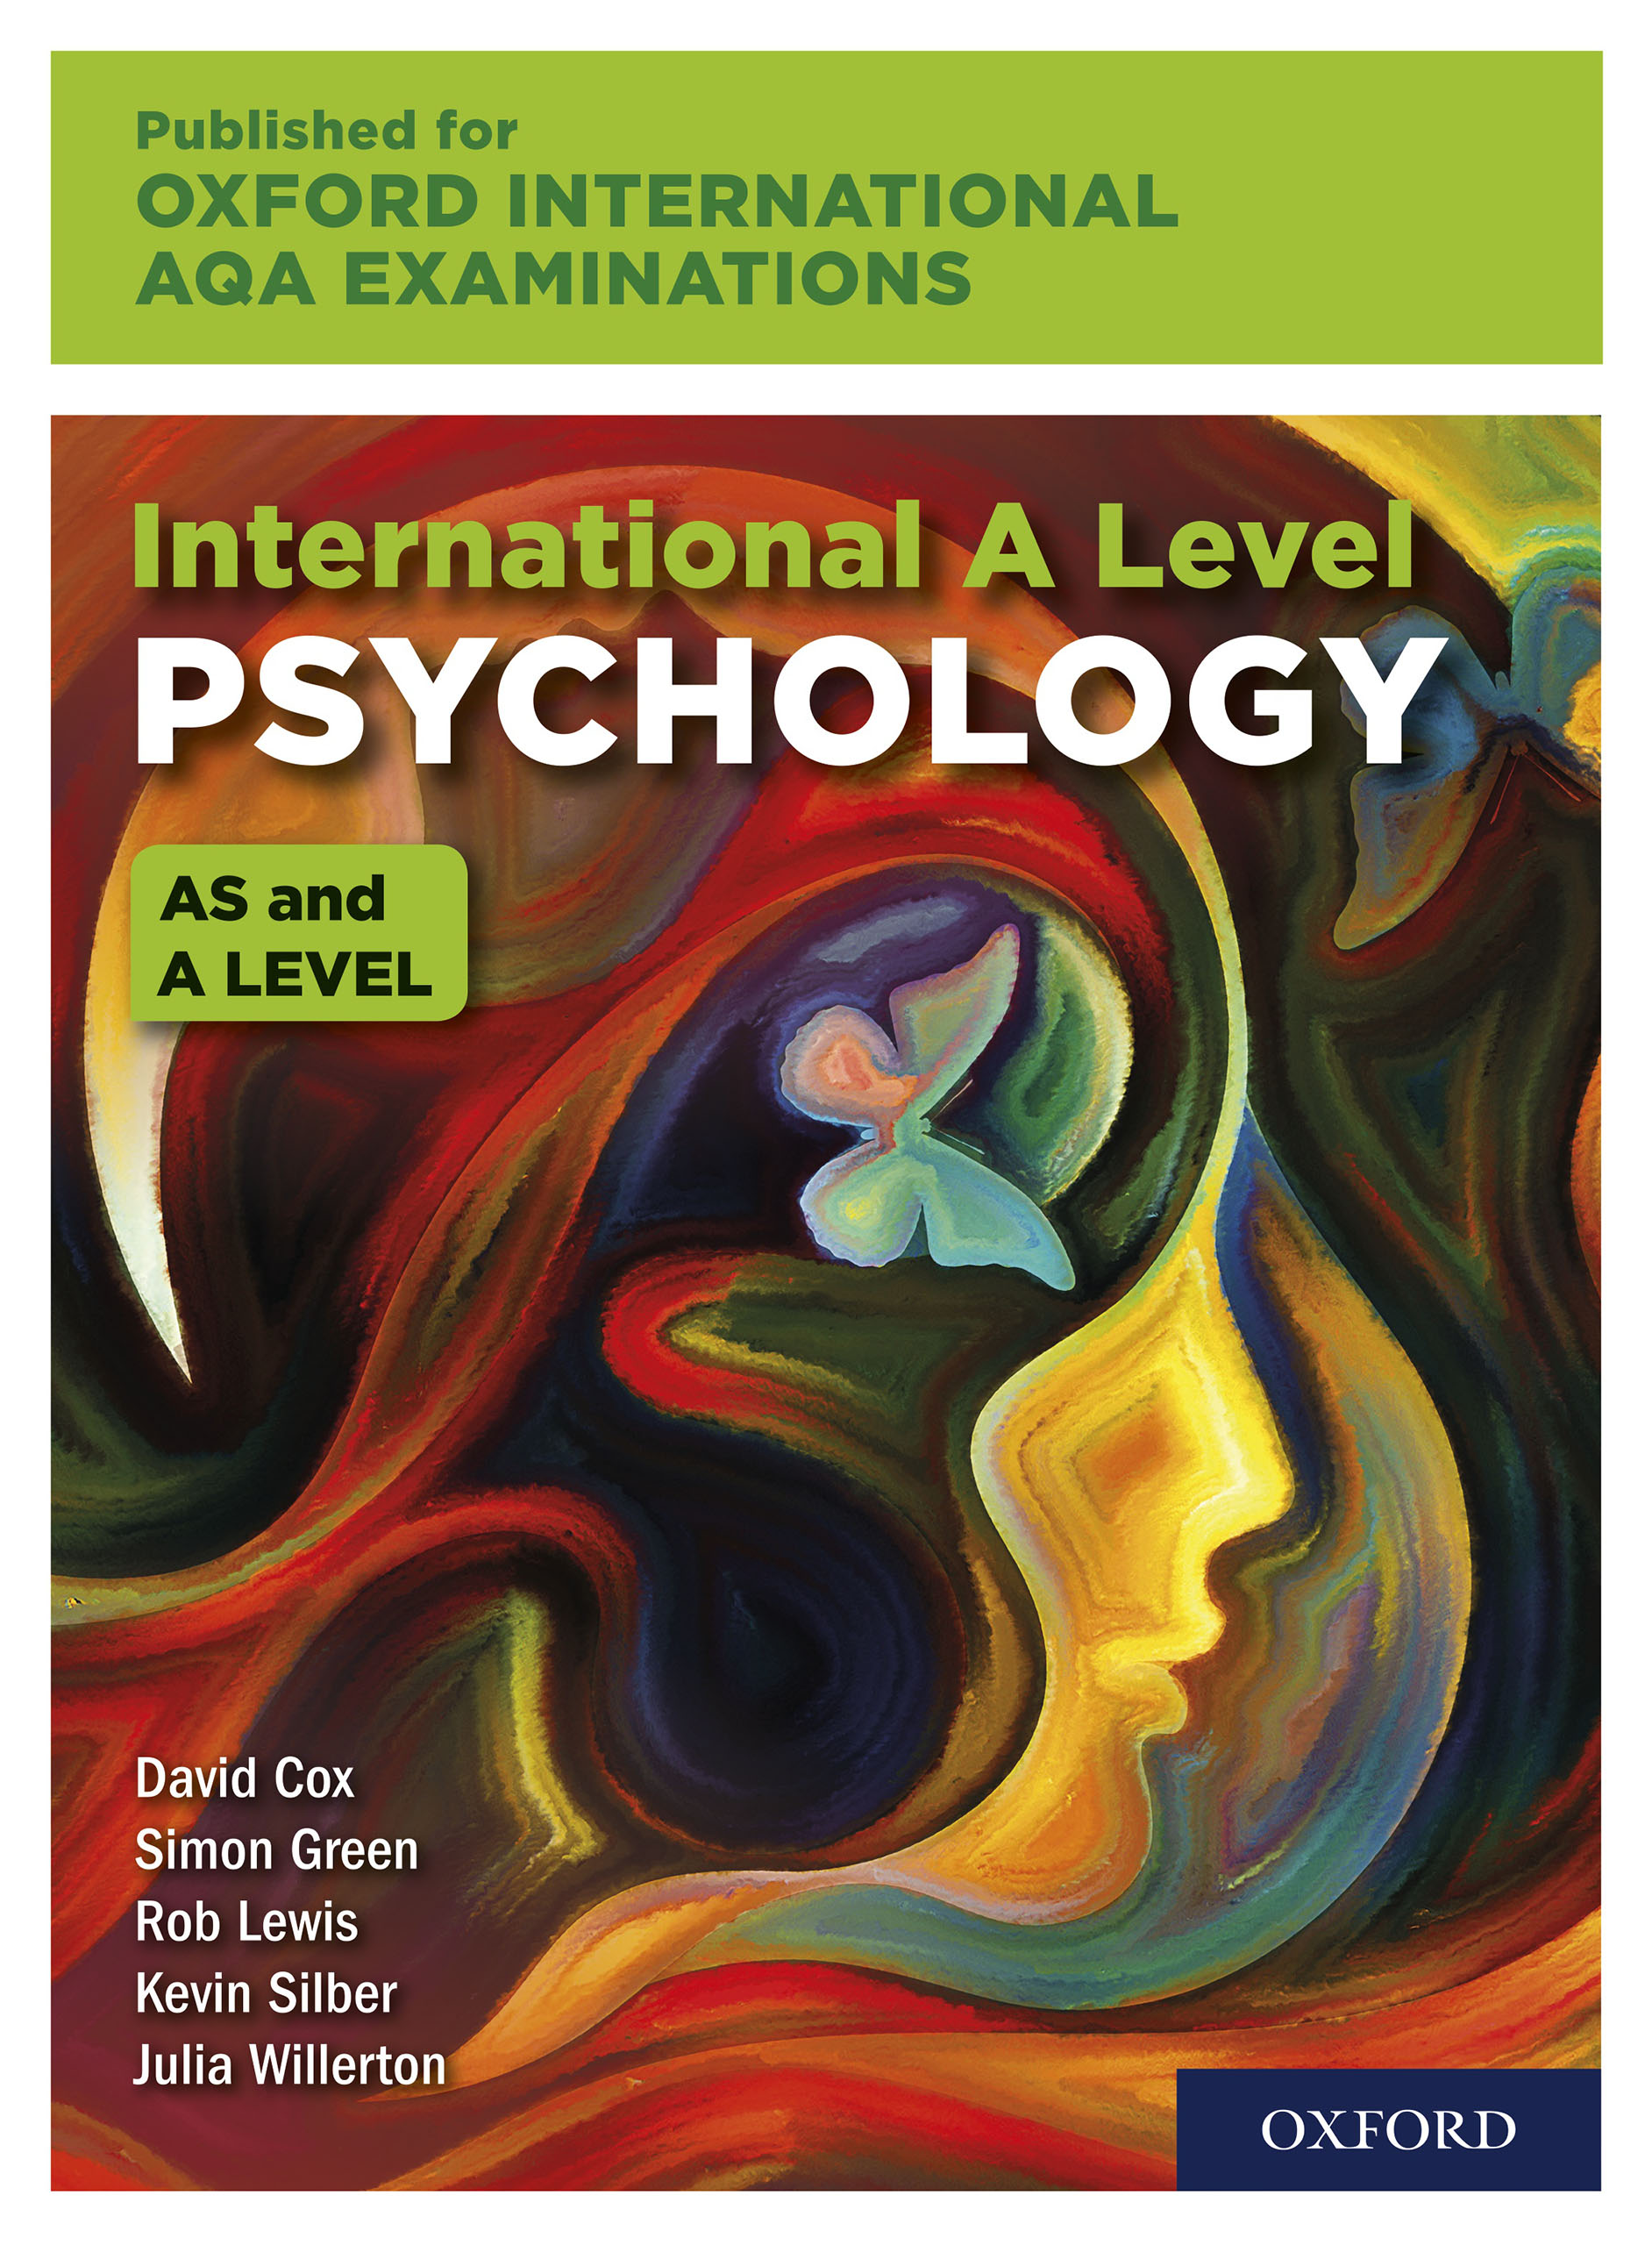 International A-Level - Psychology